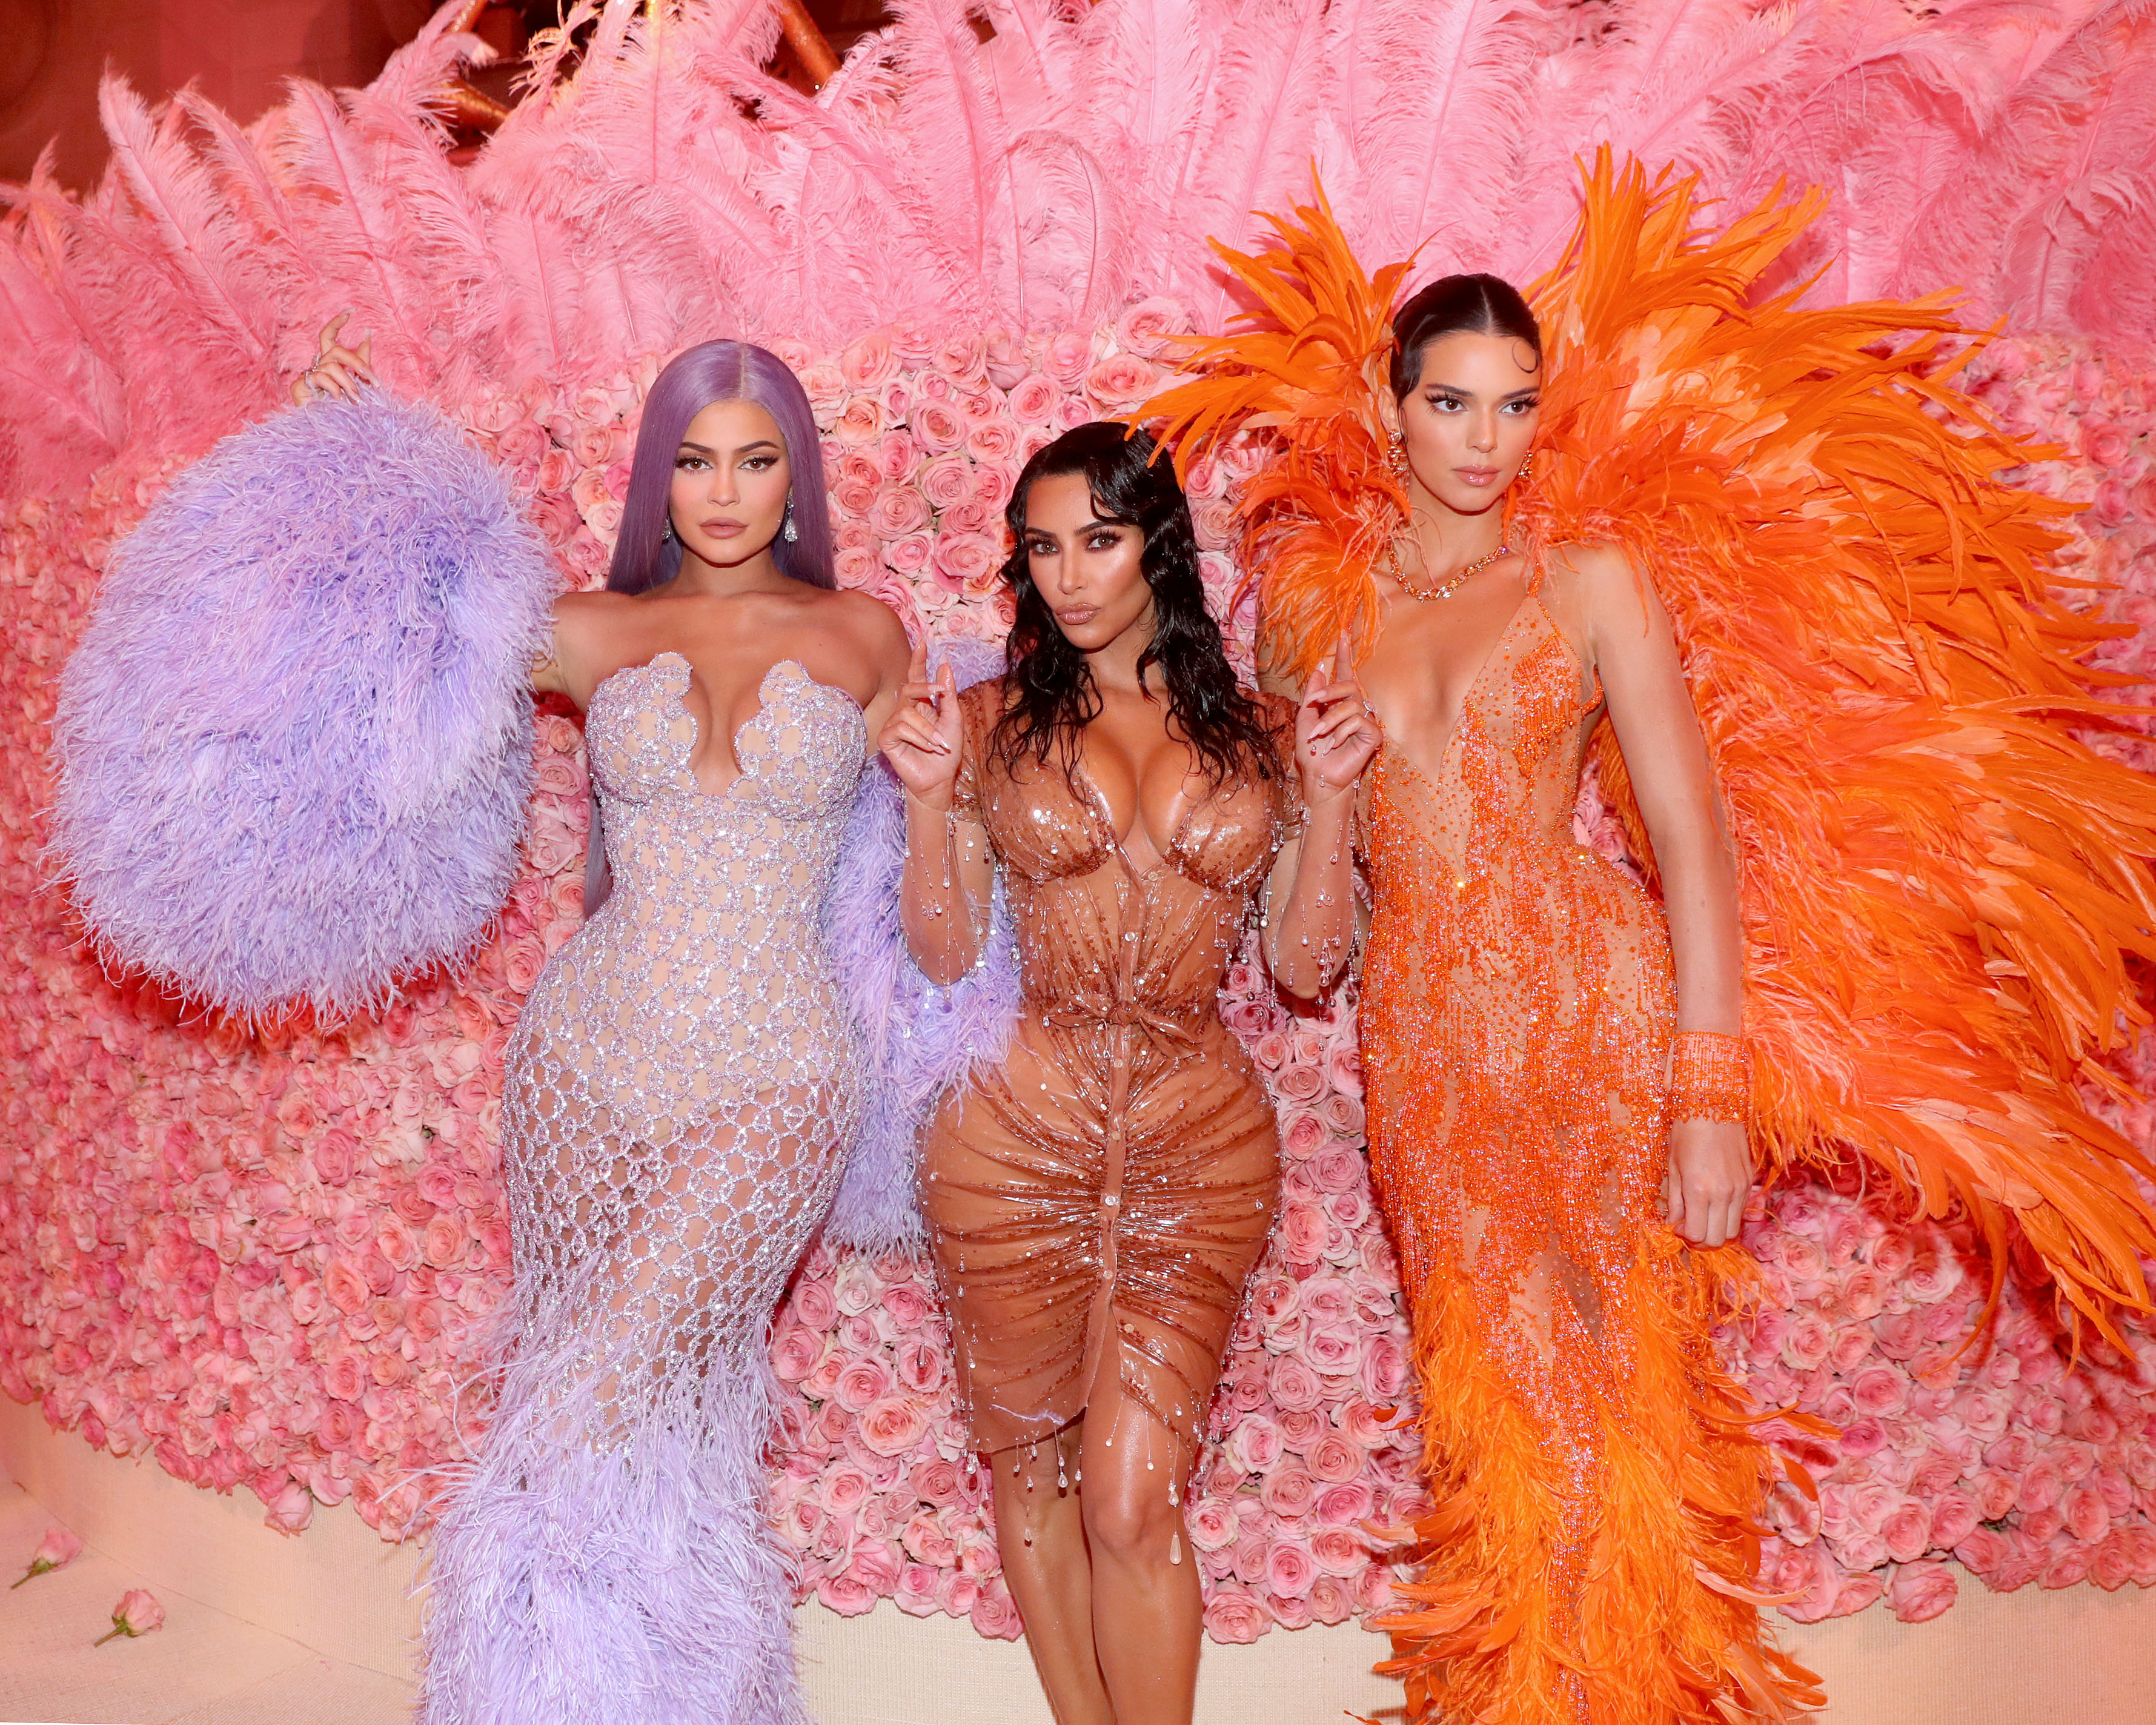 Kim Kardashian, Kylie Jenner outfits: What Australians will be